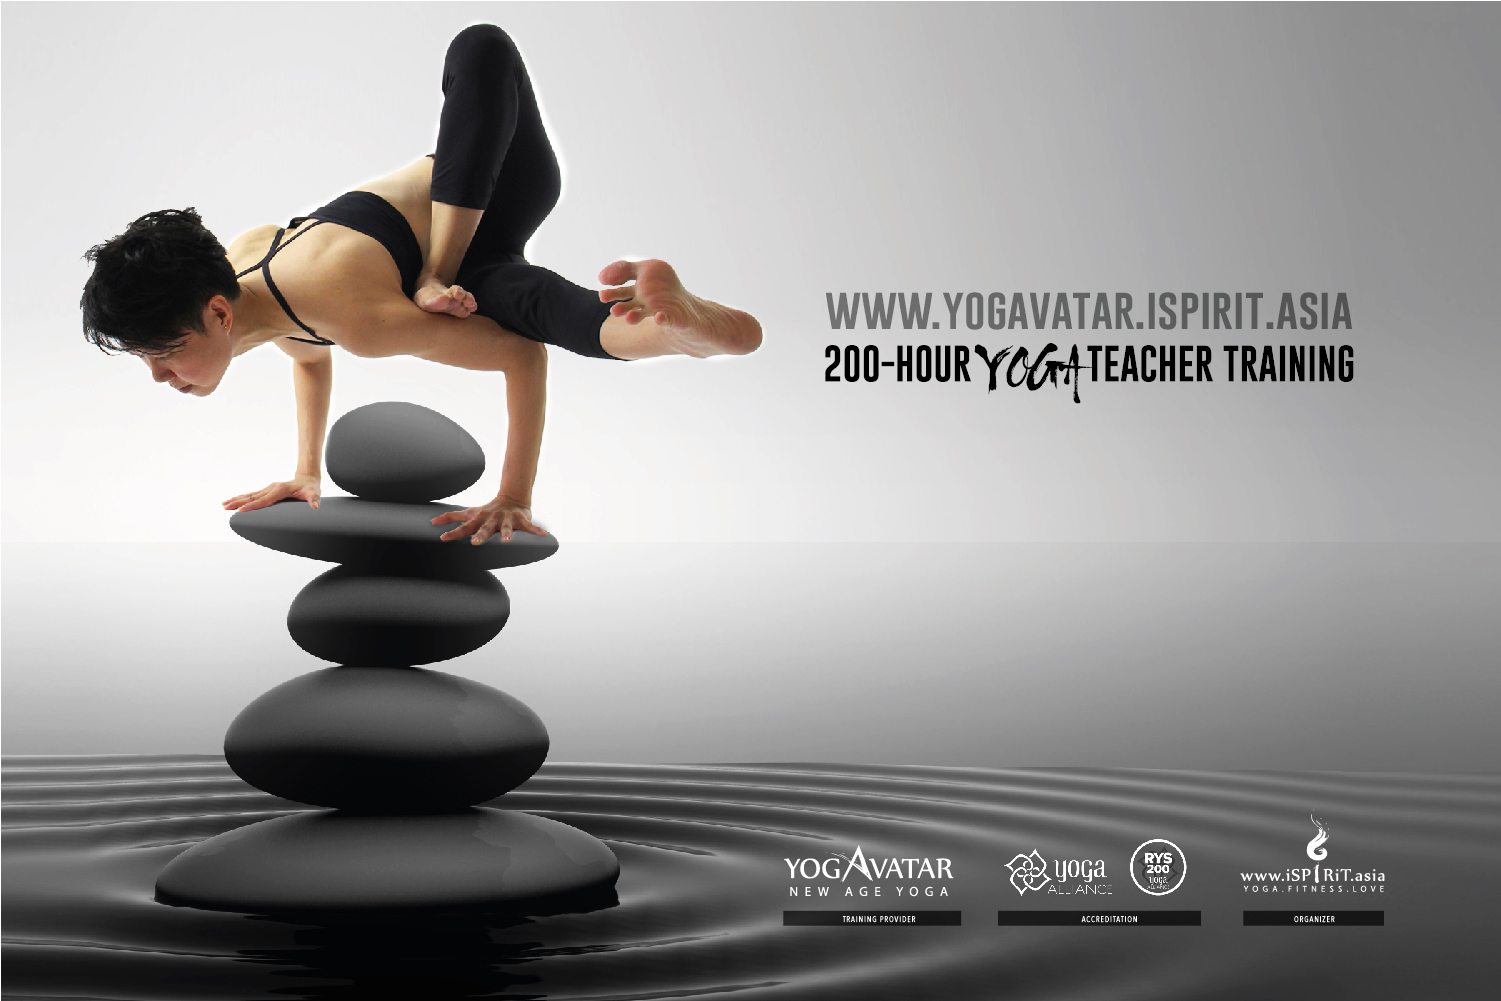 YOGAVATAR 200-Hour Yoga Teacher Training 2016